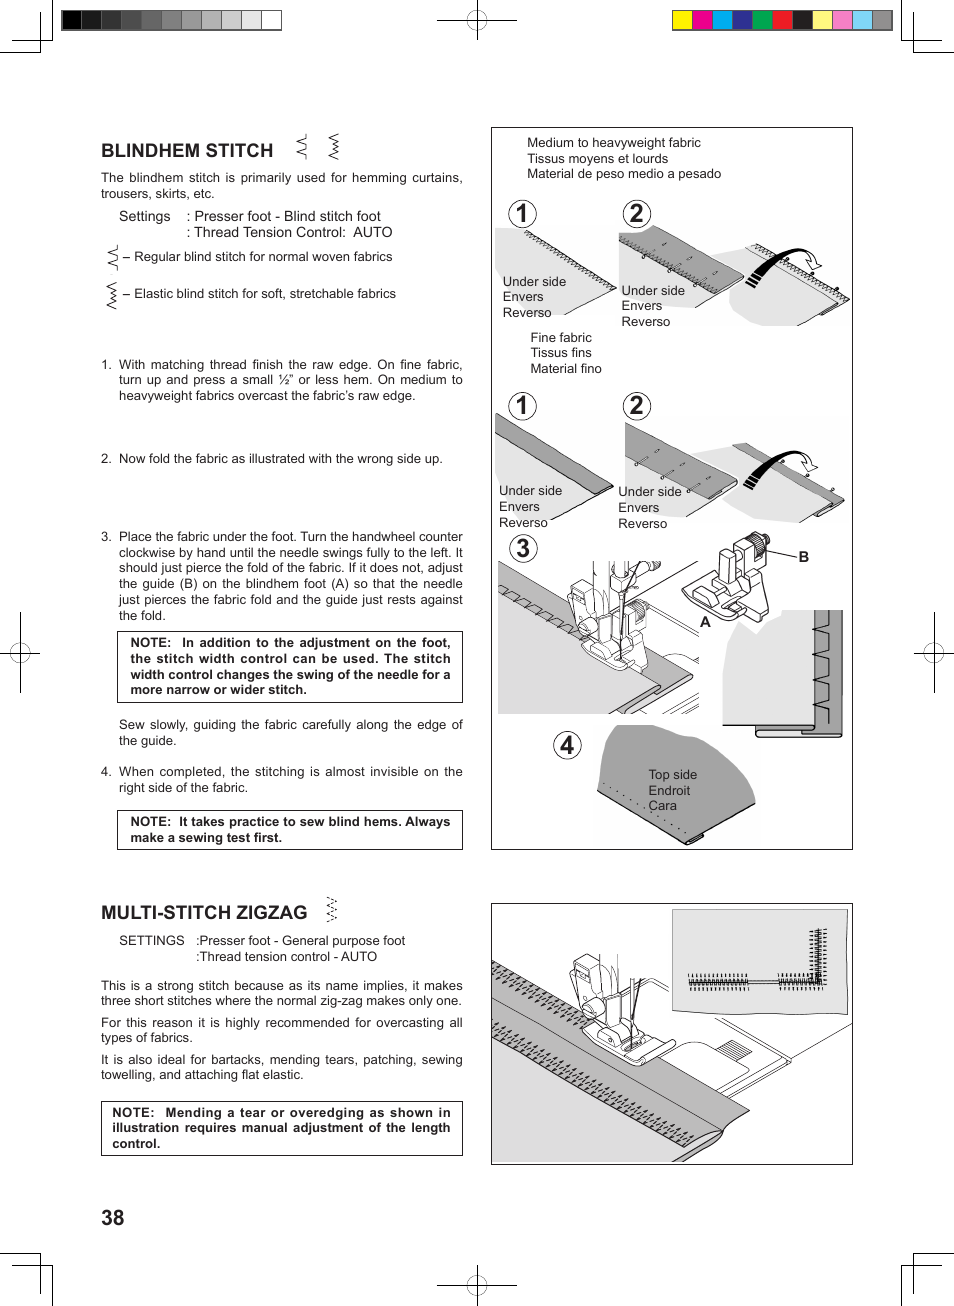 Blindhem stitch, Multi-stitch zigzag | SINGER 160 User Manual | Page 40 / 60